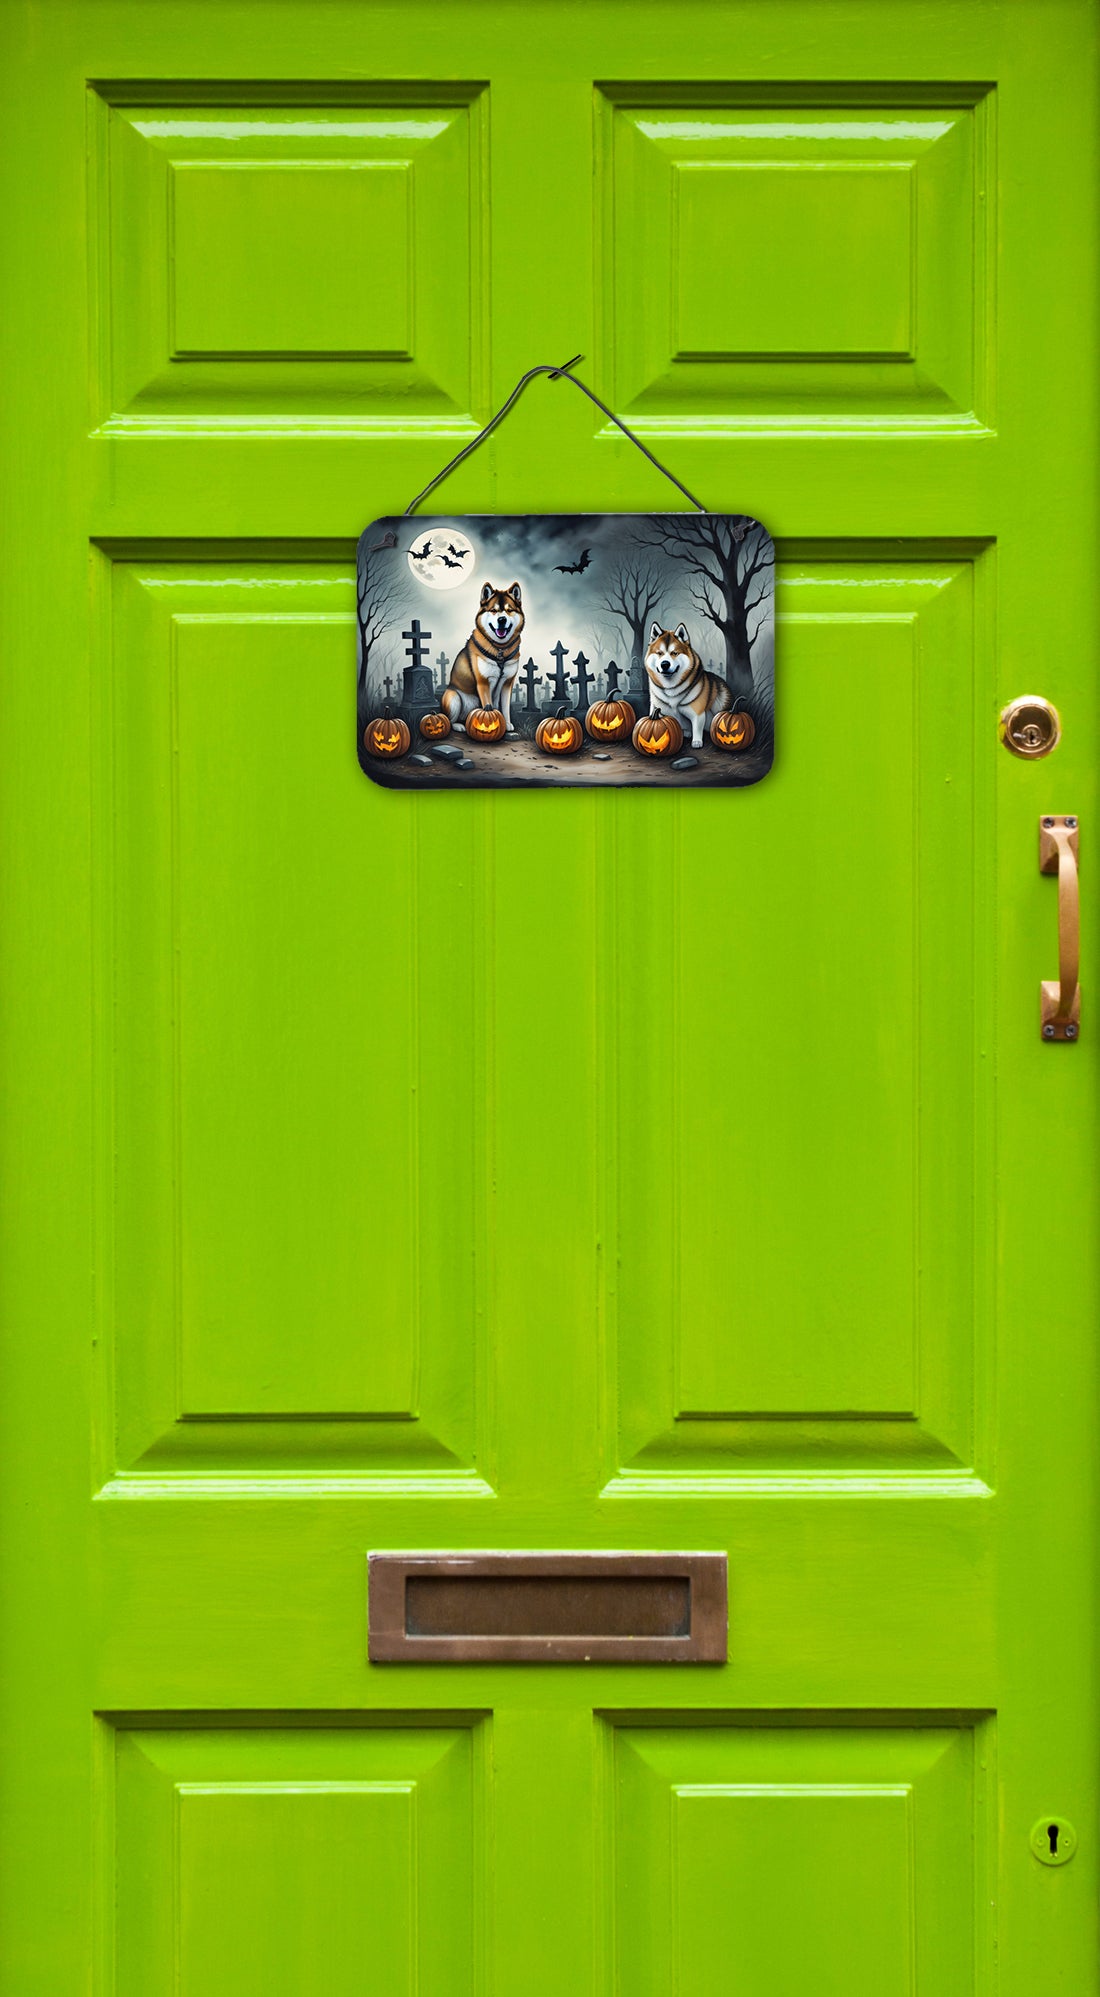 Buy this Akita Spooky Halloween Wall or Door Hanging Prints